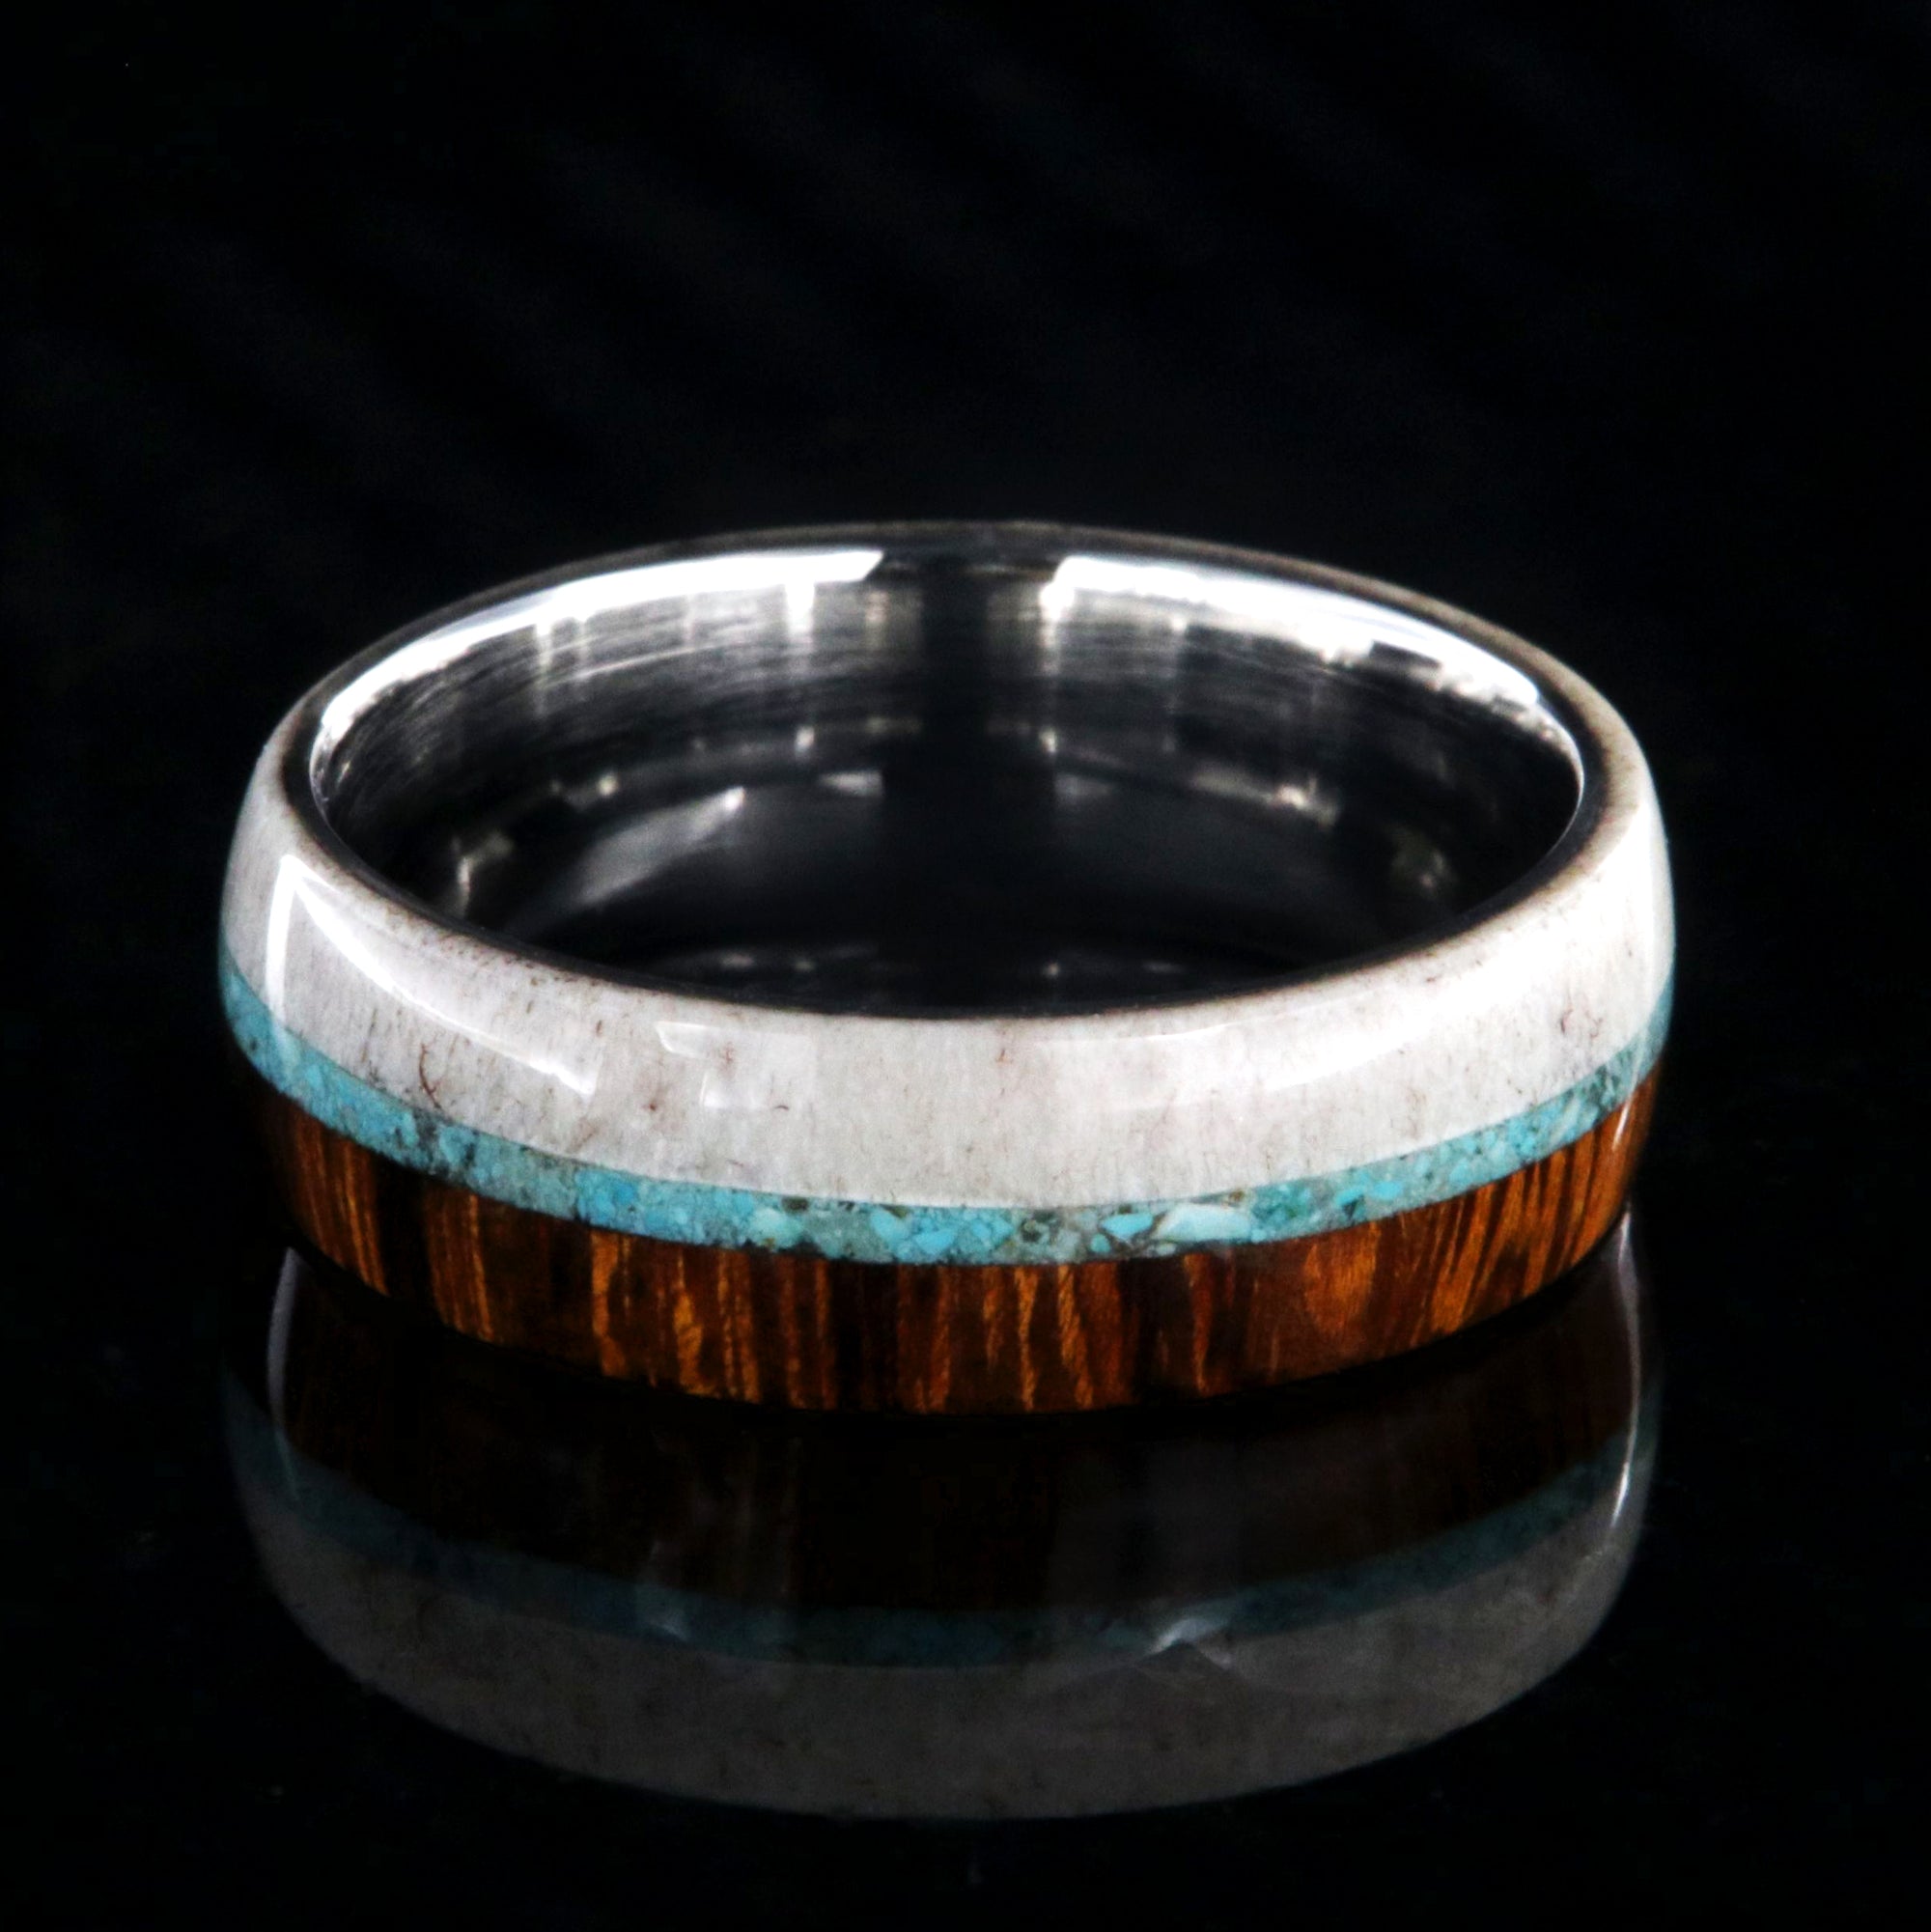 7mm wide half antler and half Arizona ironwood wedding ring with thin turquoise inlay